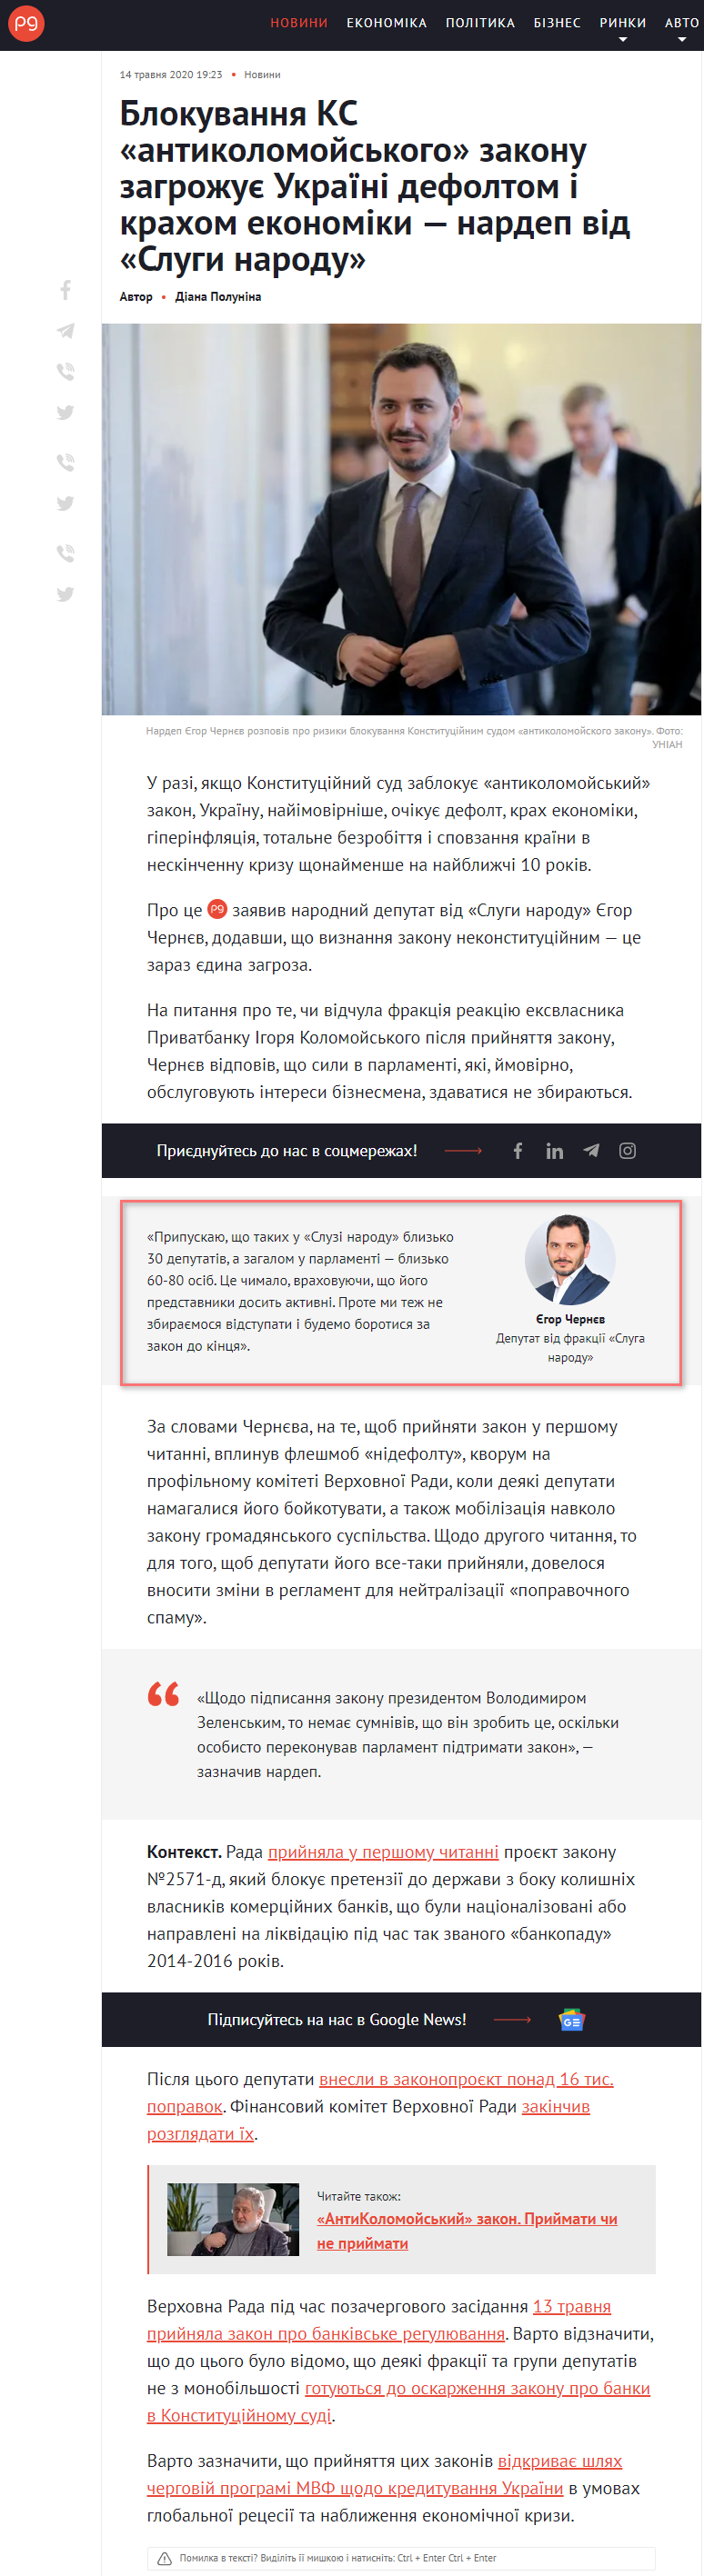 https://thepage.ua/ua/news/blokuvannya-konstitucijnim-sudom-antikolomojskogo-zakonu